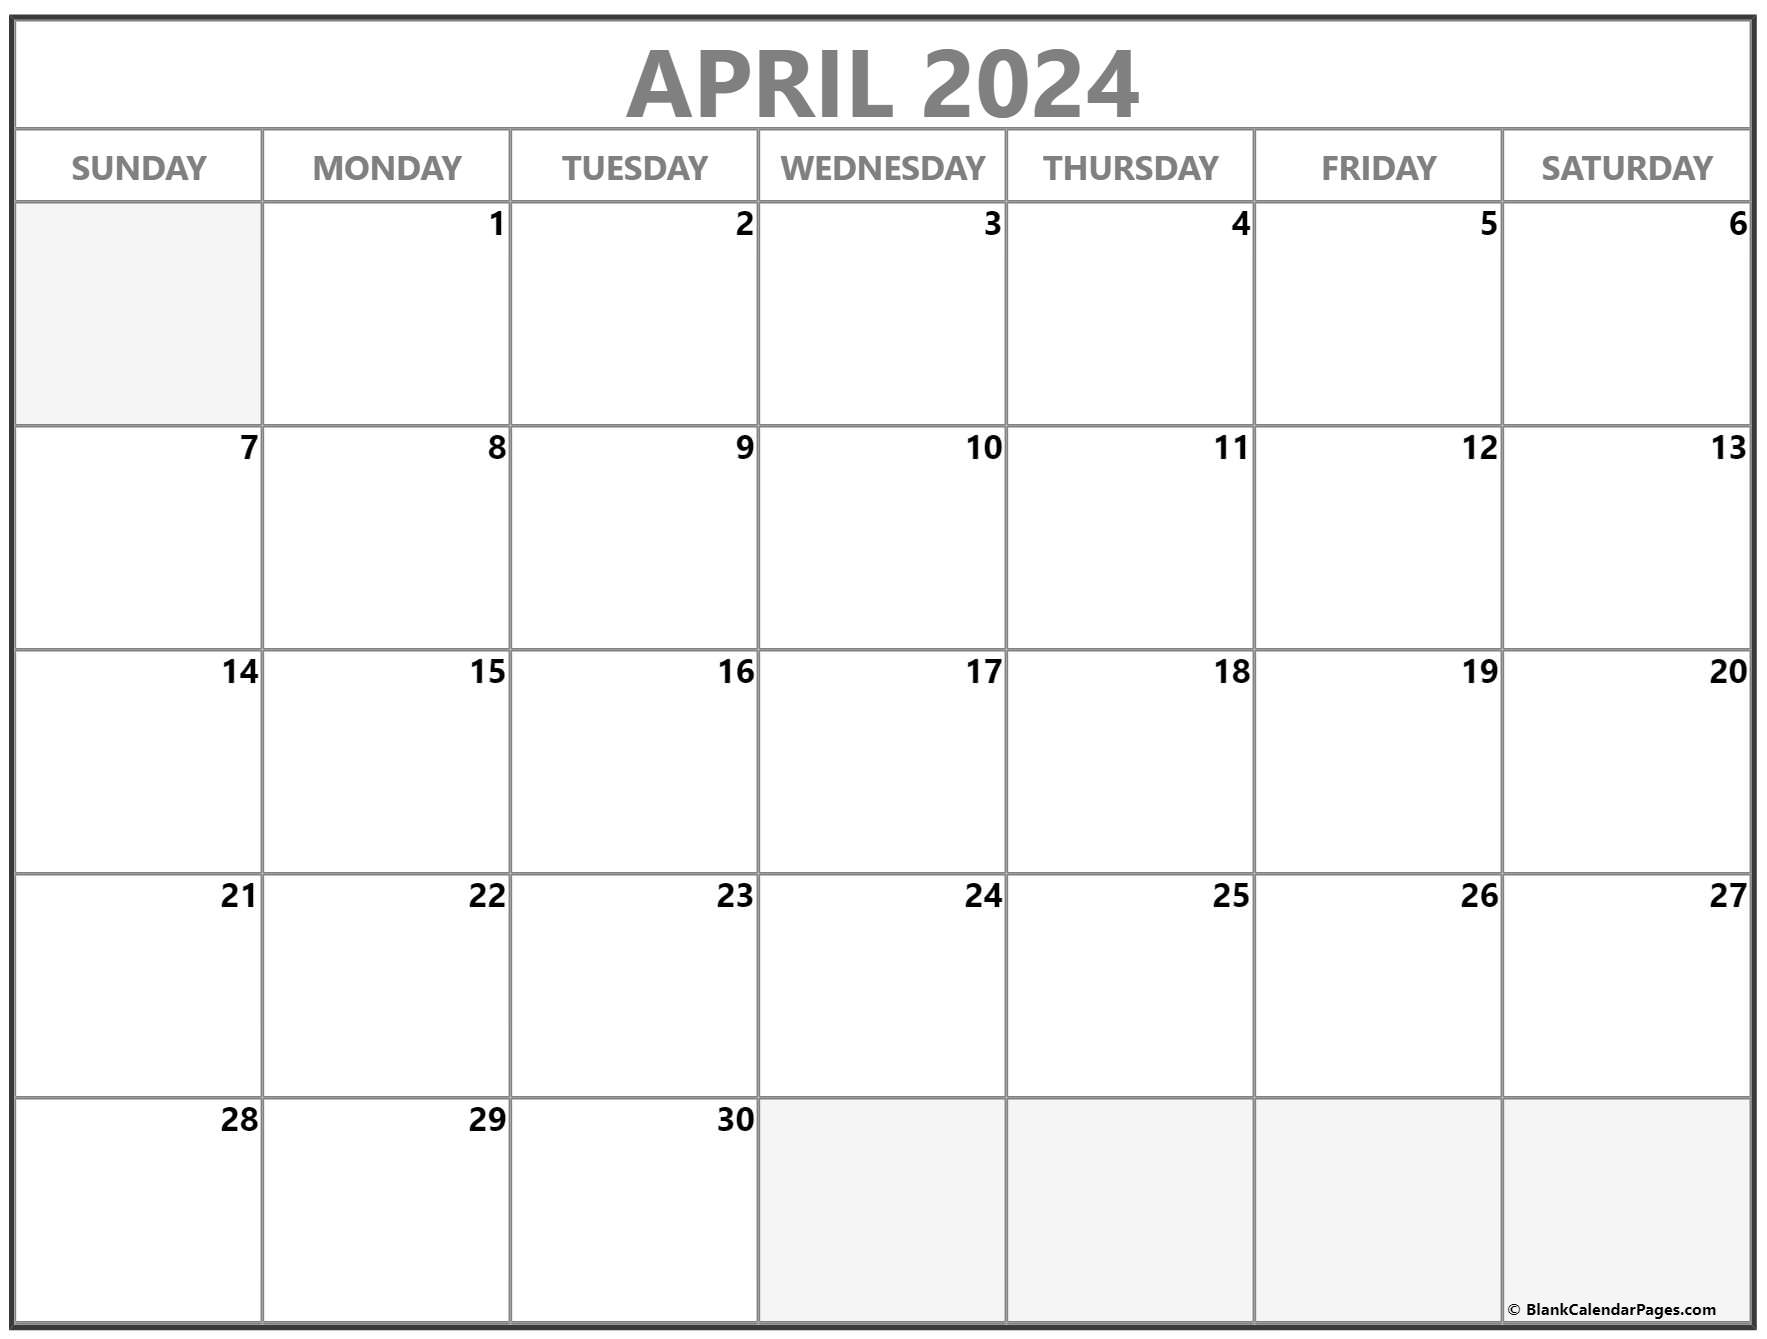 April 2024 Calendar Free Printable Calendar - Free Printable Calendar April 2024 To April 2024